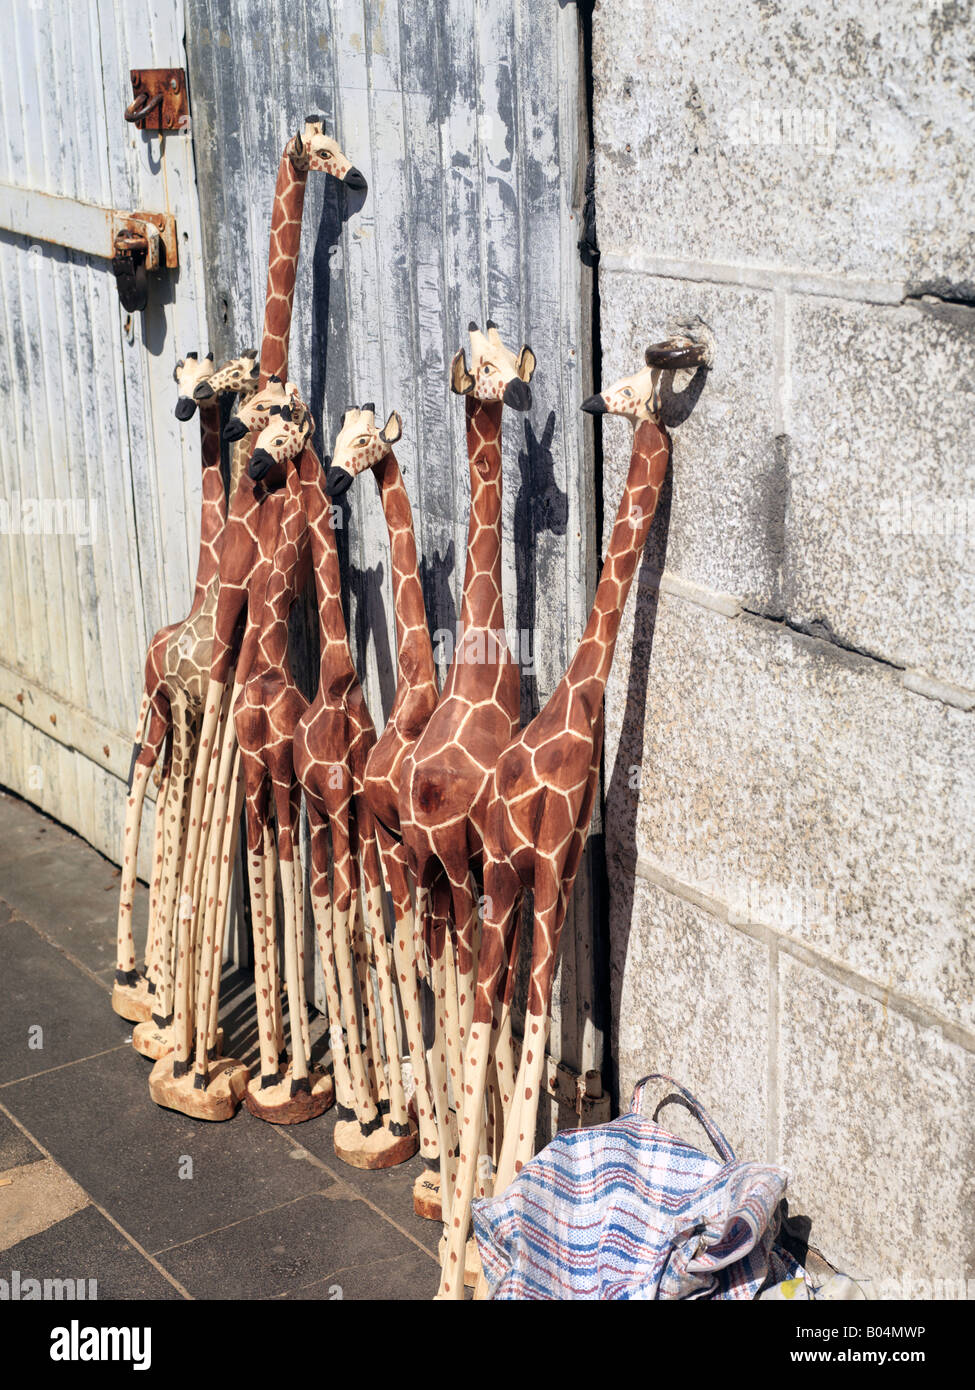 Port Louis Mauritius Wooden Giraffes in Market Stock Photo